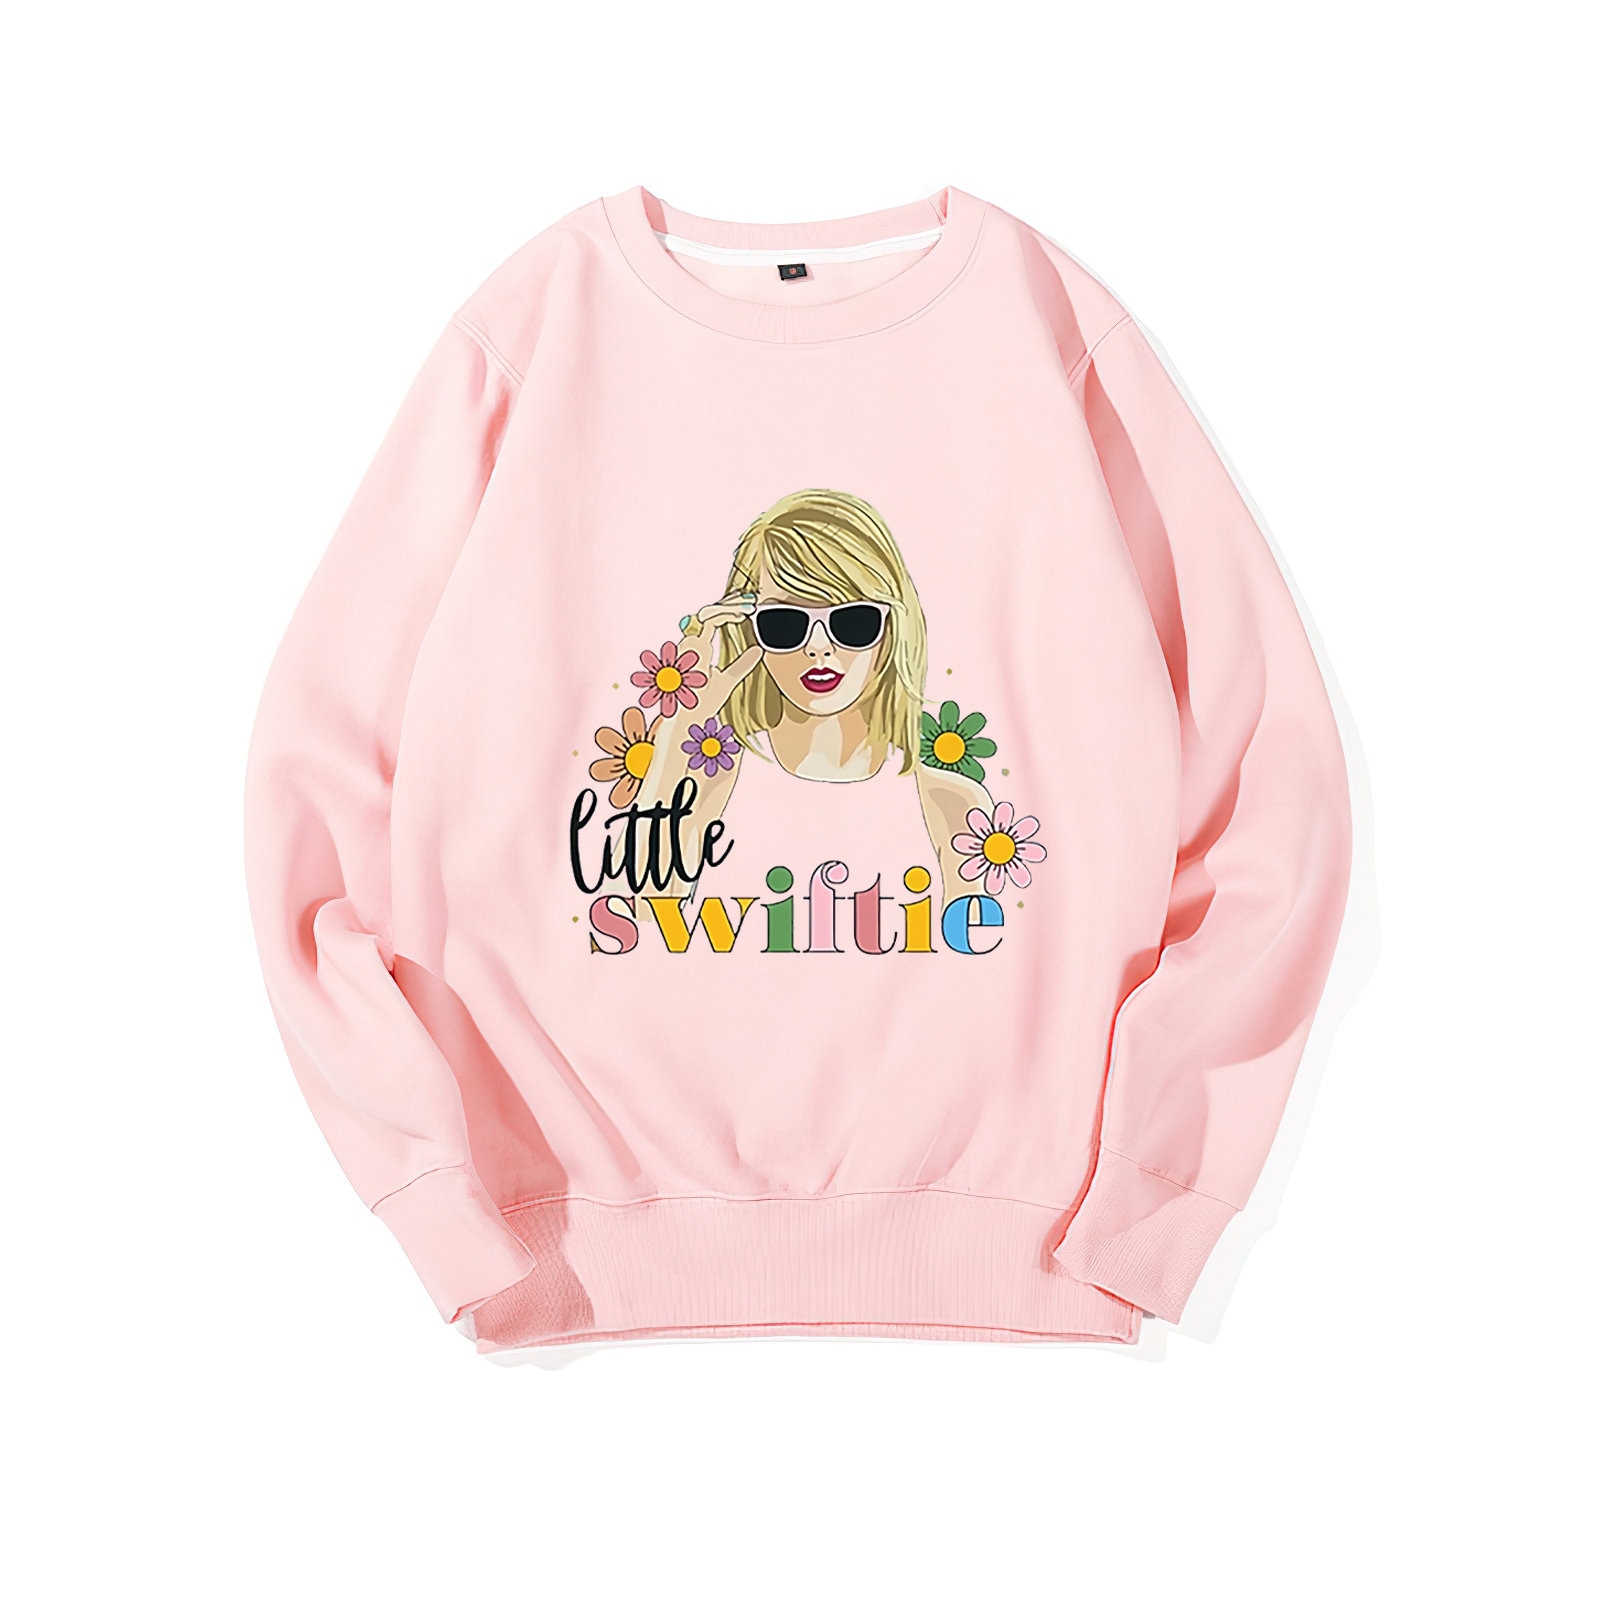 KIDS Lover Taylor Swift Swiftie Merch Inspired Sweatshirt sweater & T-shirt  